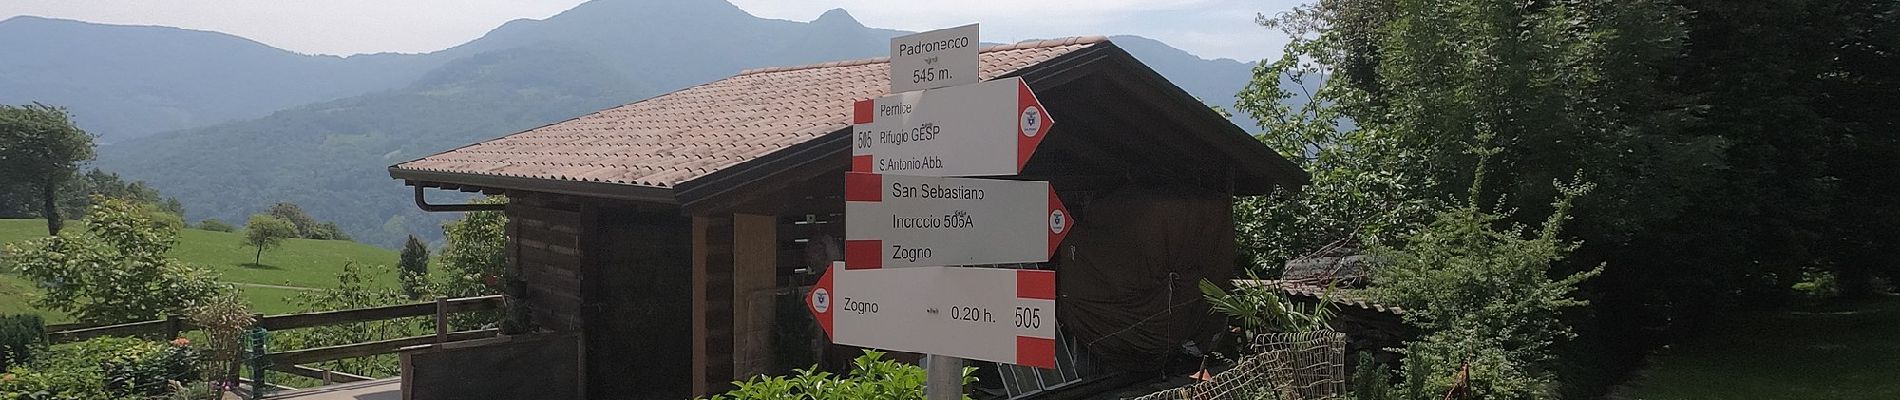 Excursión A pie Val Brembilla - Sentiero 505A: Zogno - Tiglio - S. Antonio Abbandonato - Castignola - Photo